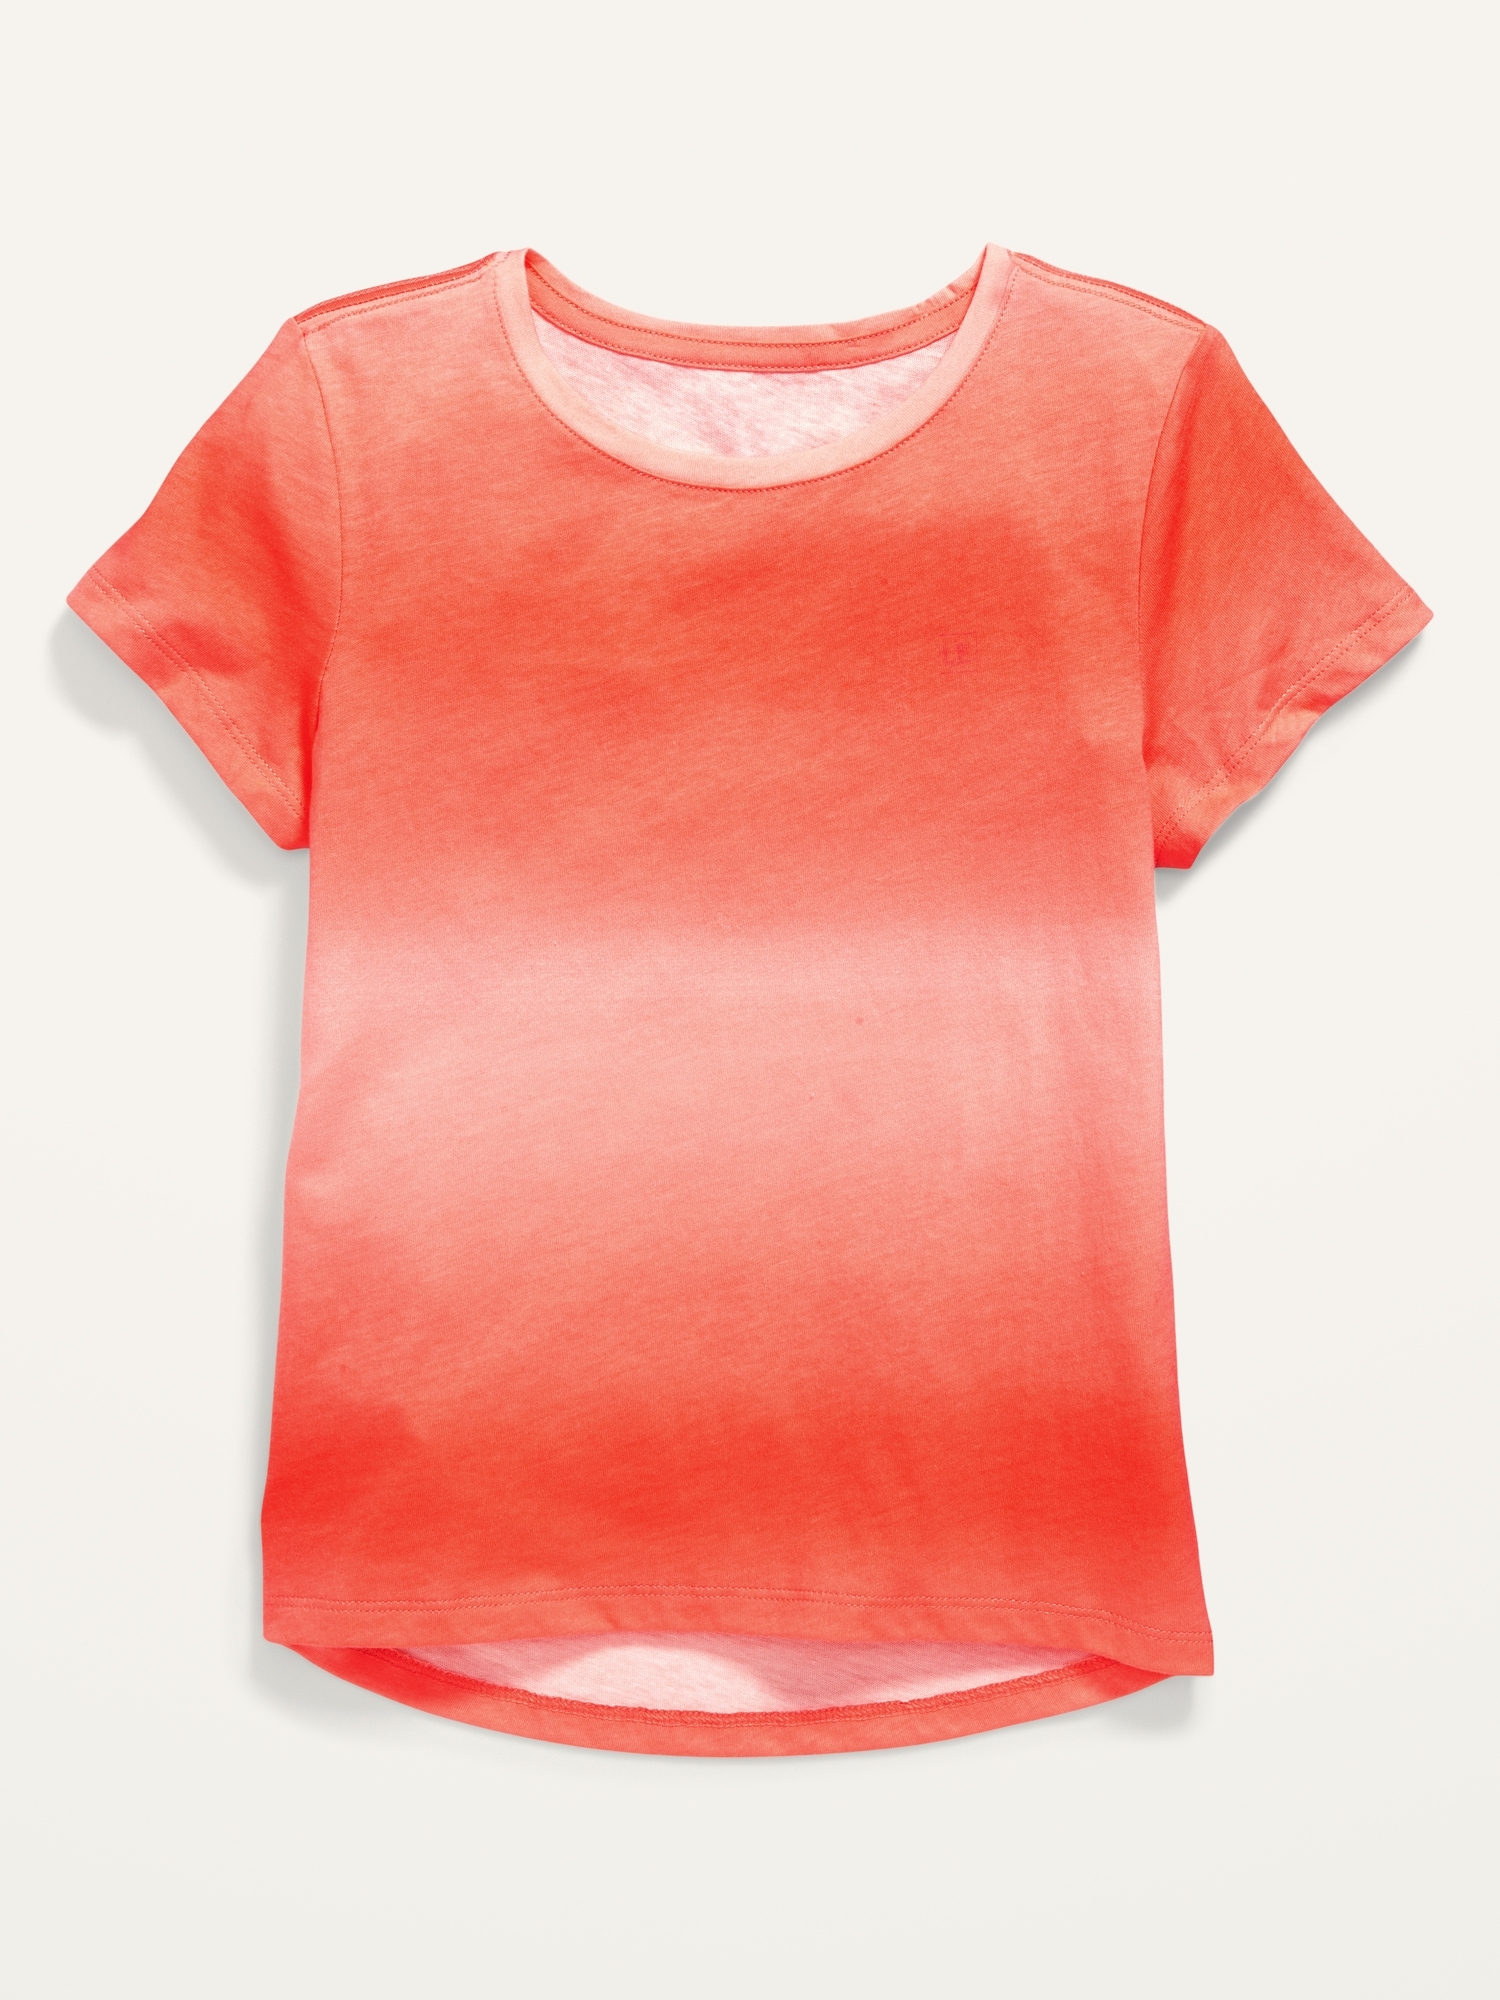 Oldnavy Softest Printed Crew-Neck T-Shirt for Girls